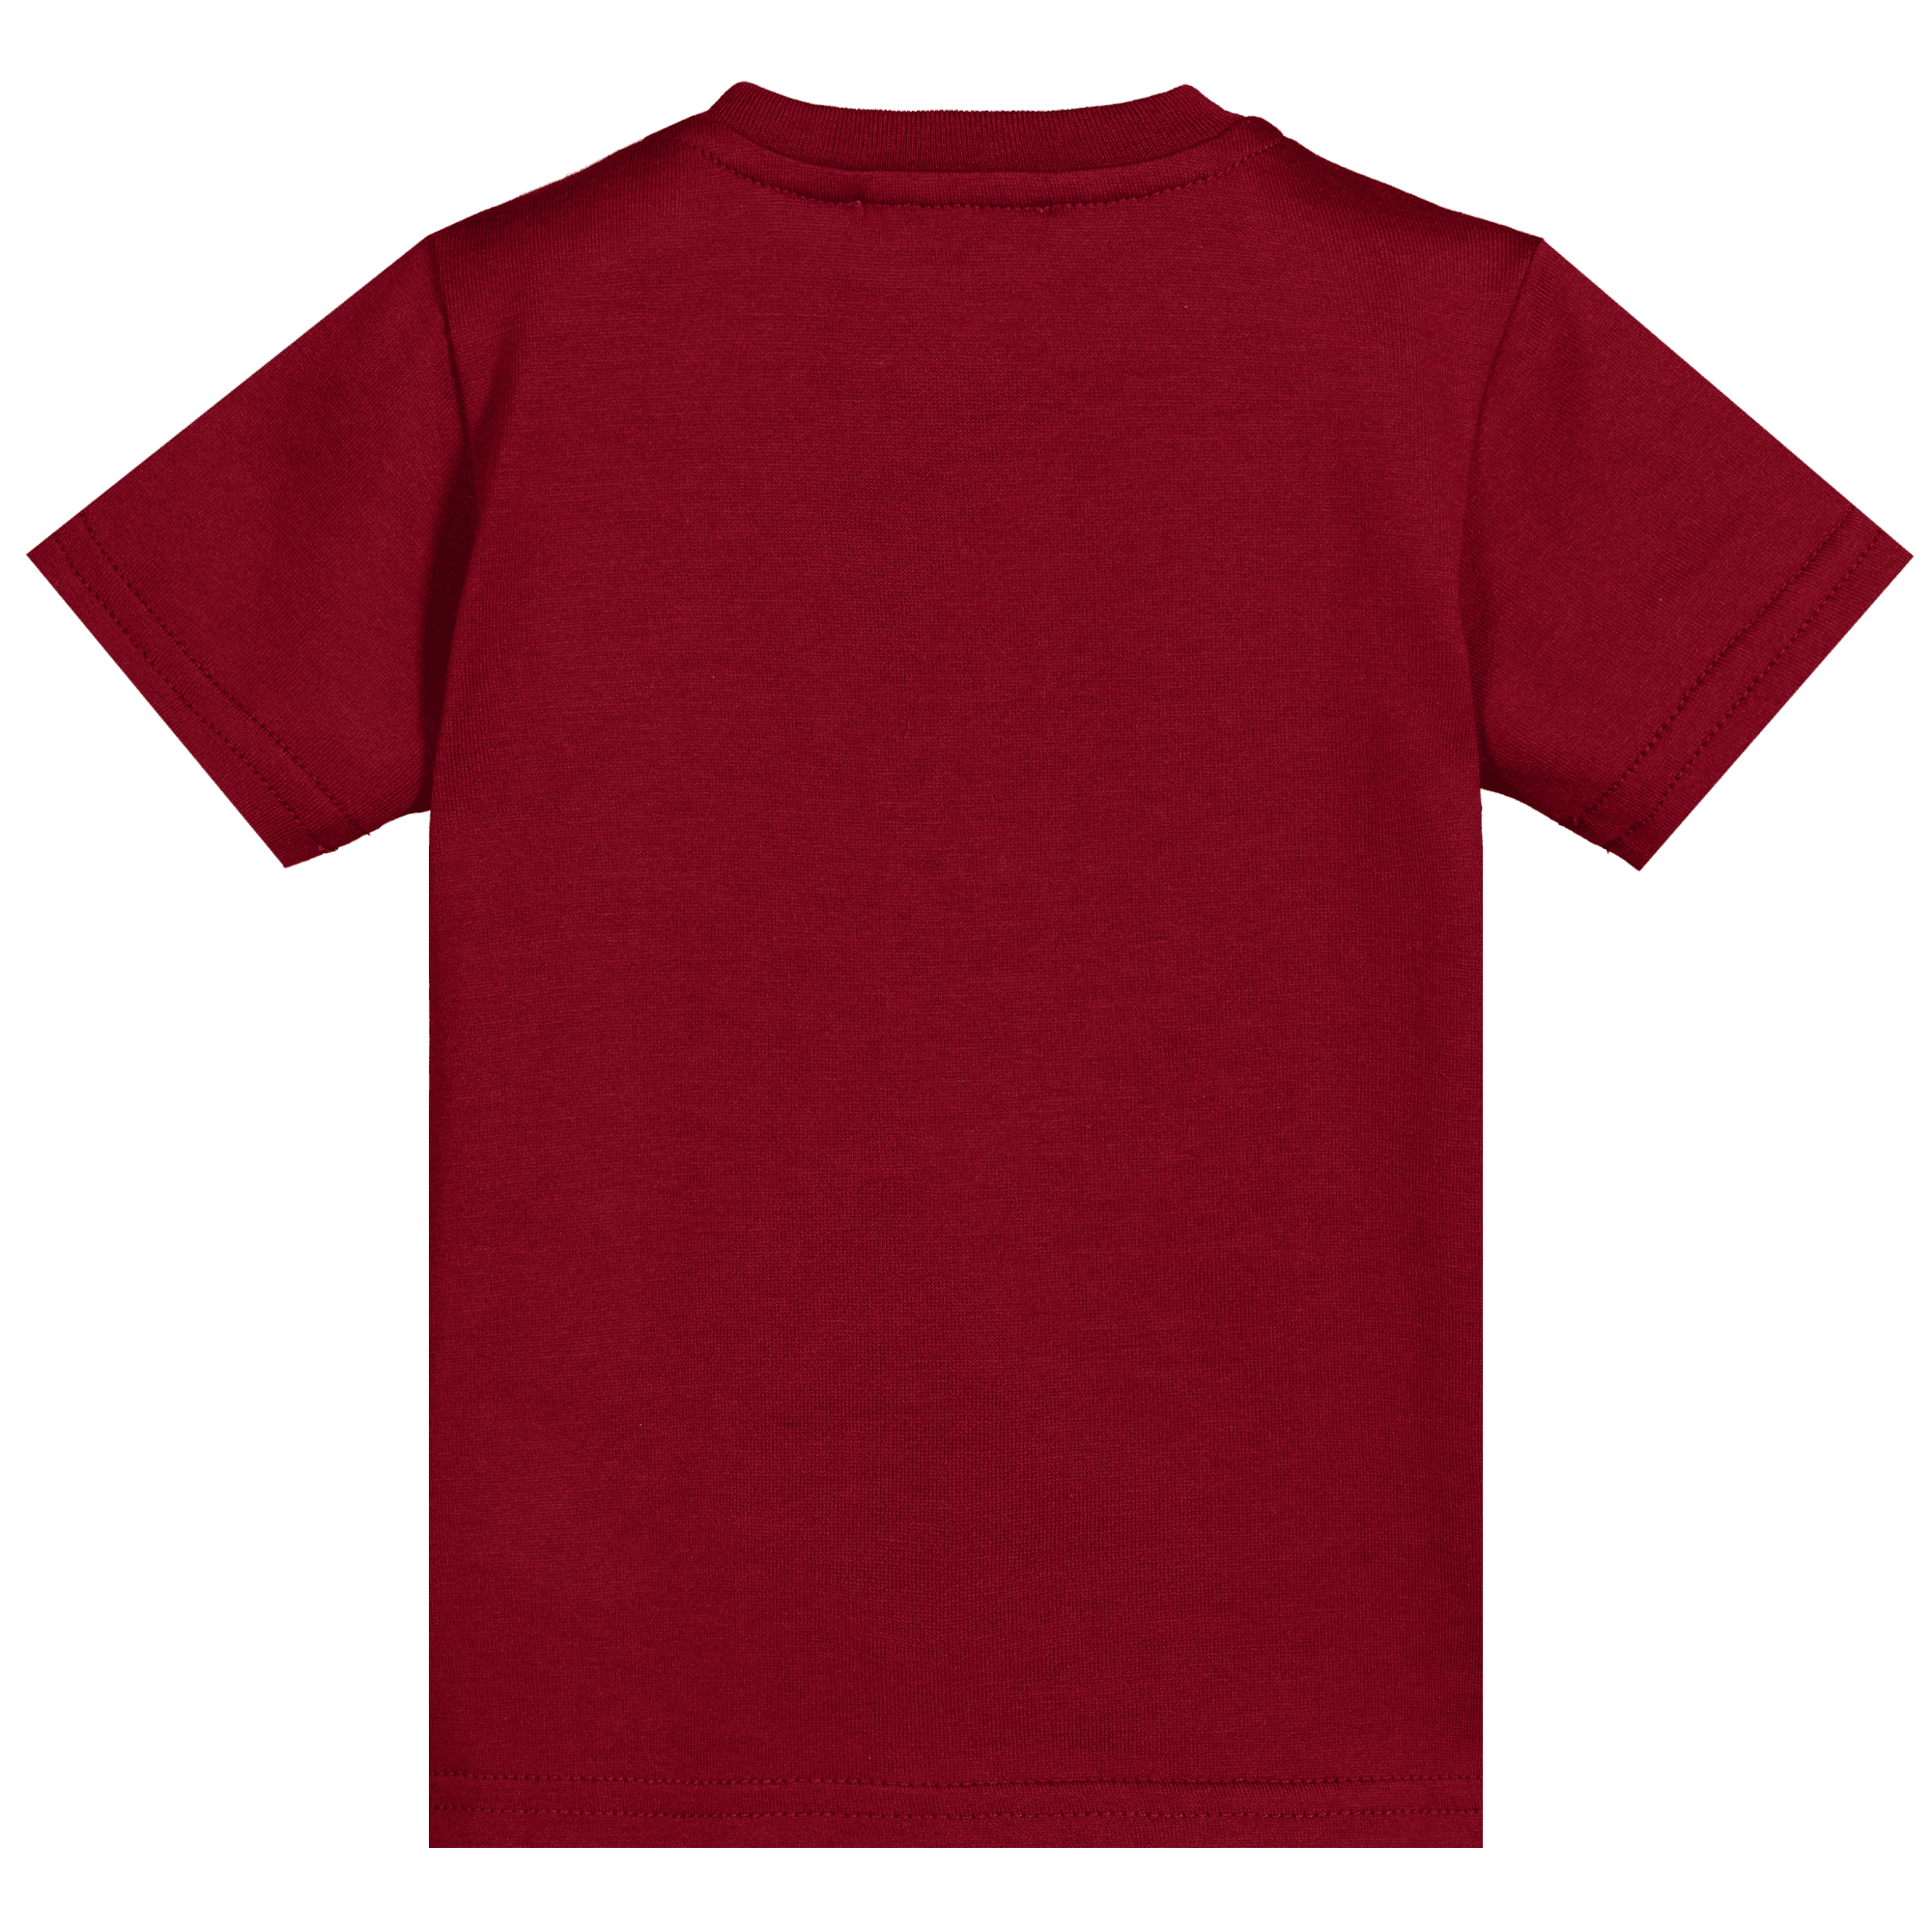 Dolce & Gabbana Boys Cotton Crown T-shirt Red Burgundy 6Y